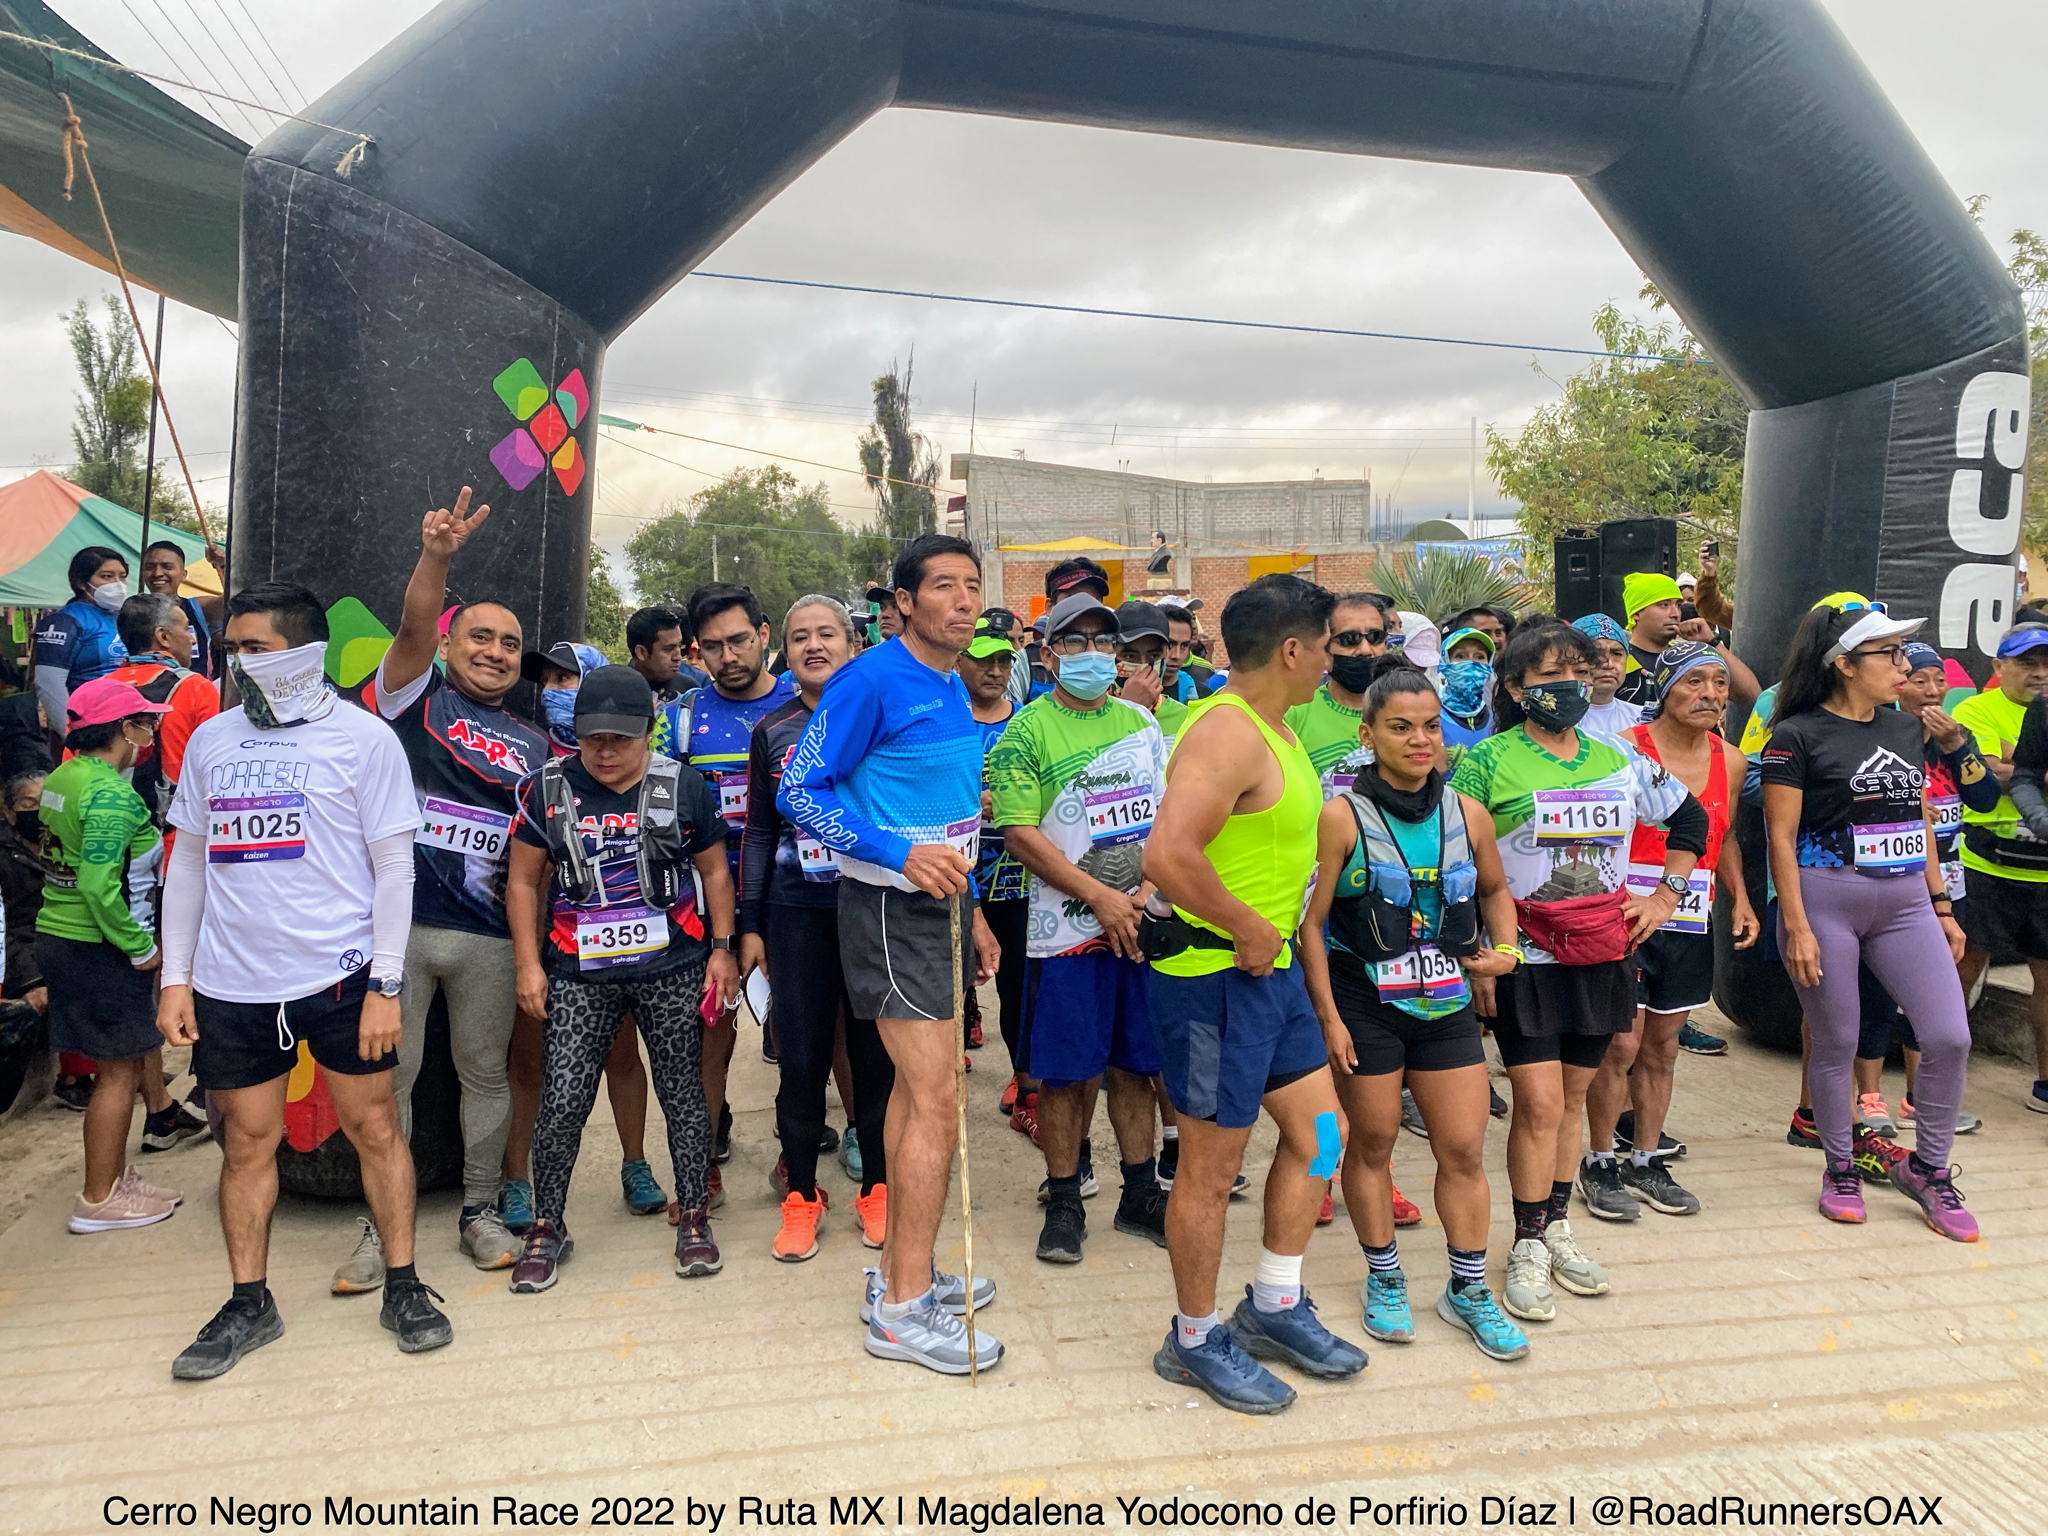 Cerro Negro Mountain Race 2022 by Ruta MX - Nochixtl谩n